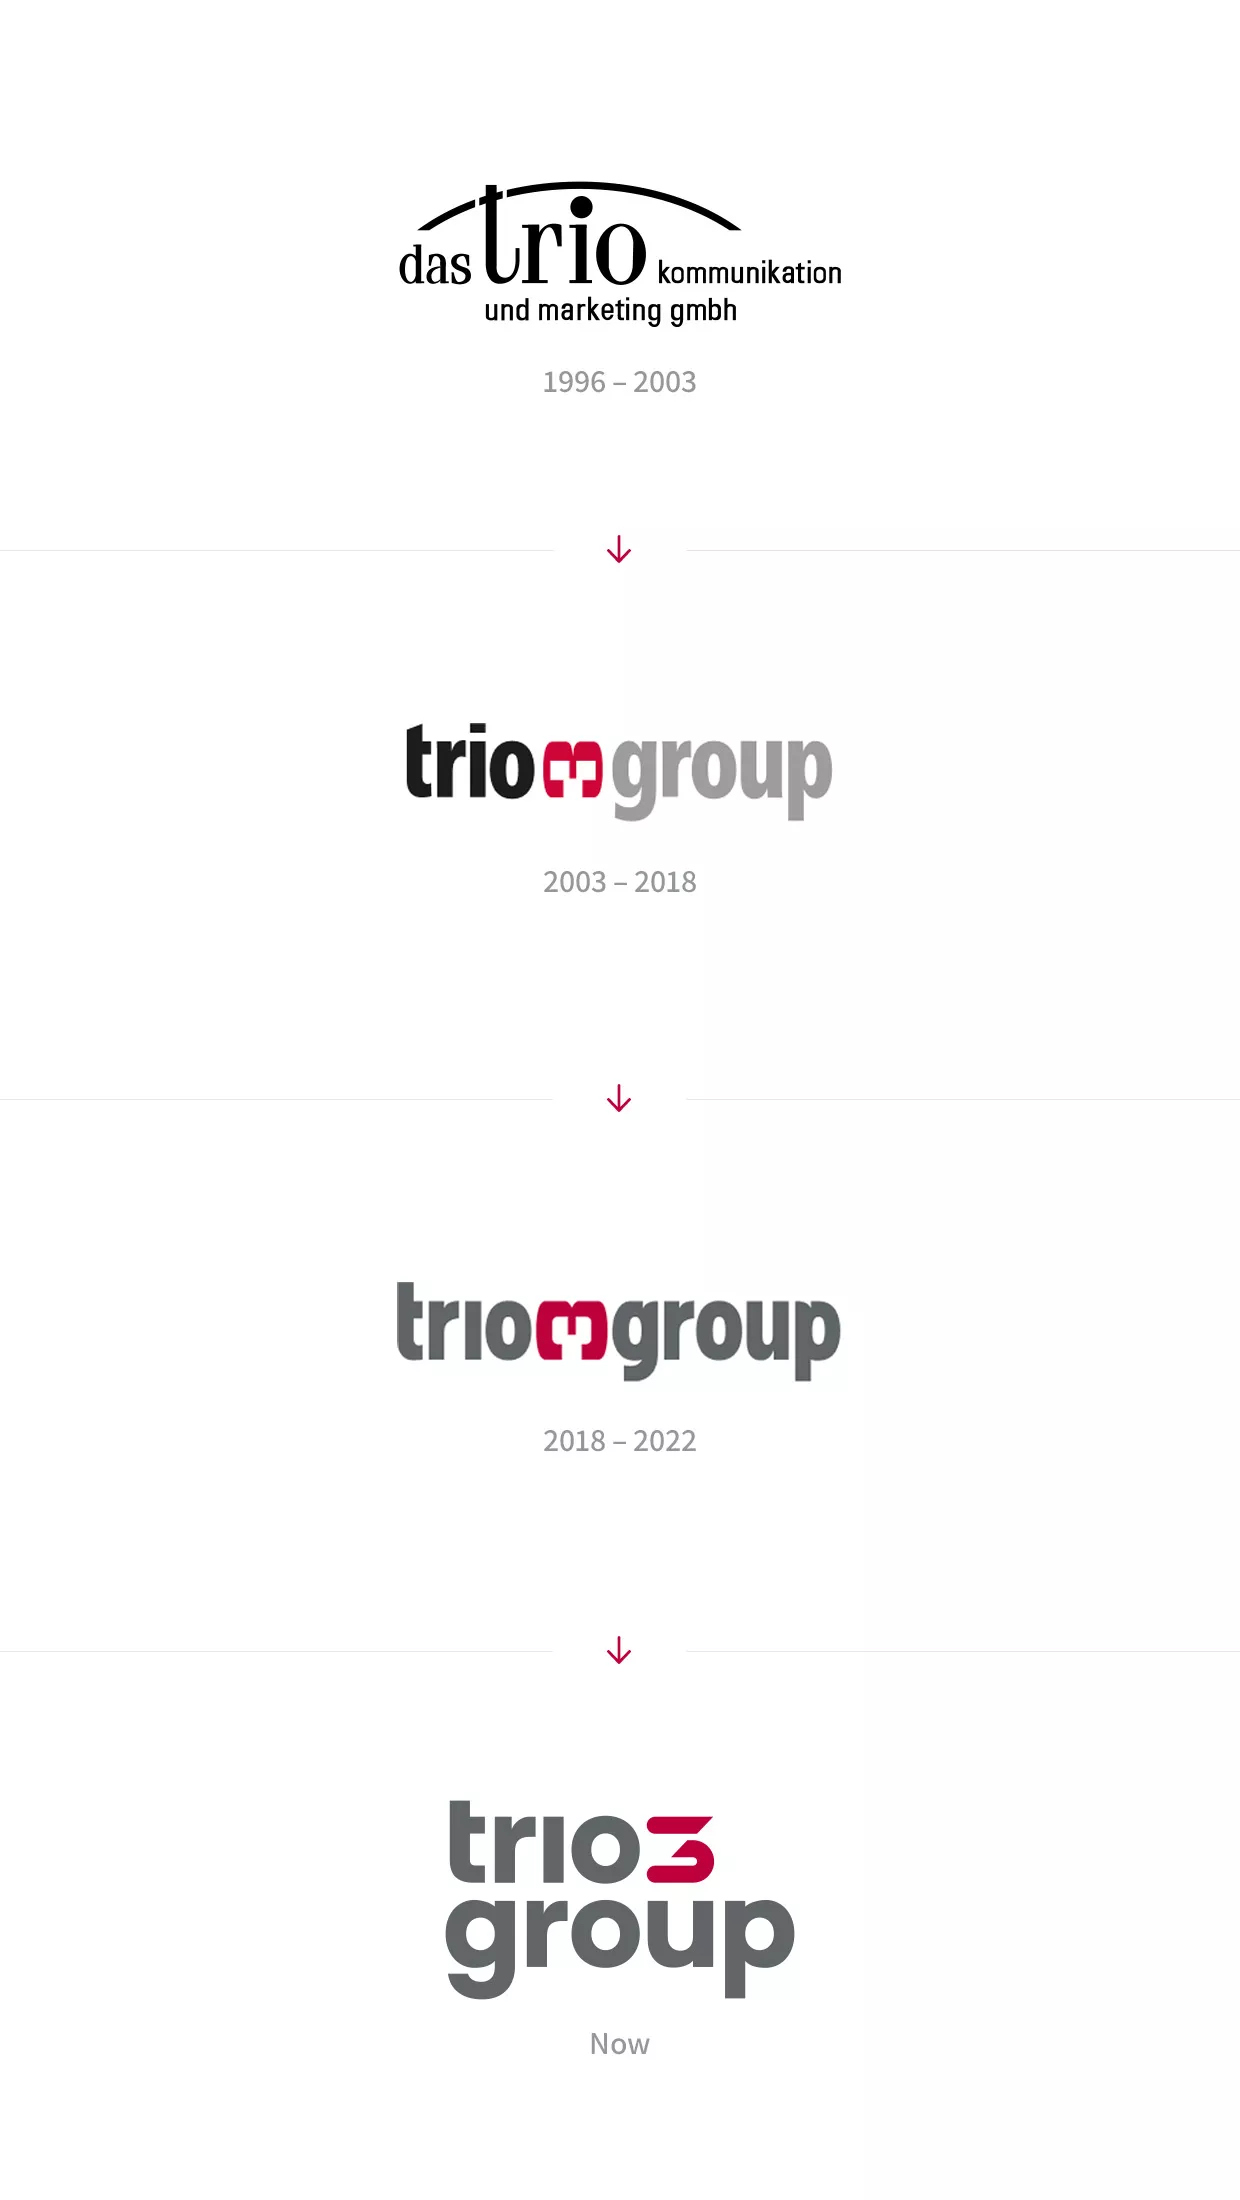 trio-group Logos Zeitstrahl Historie